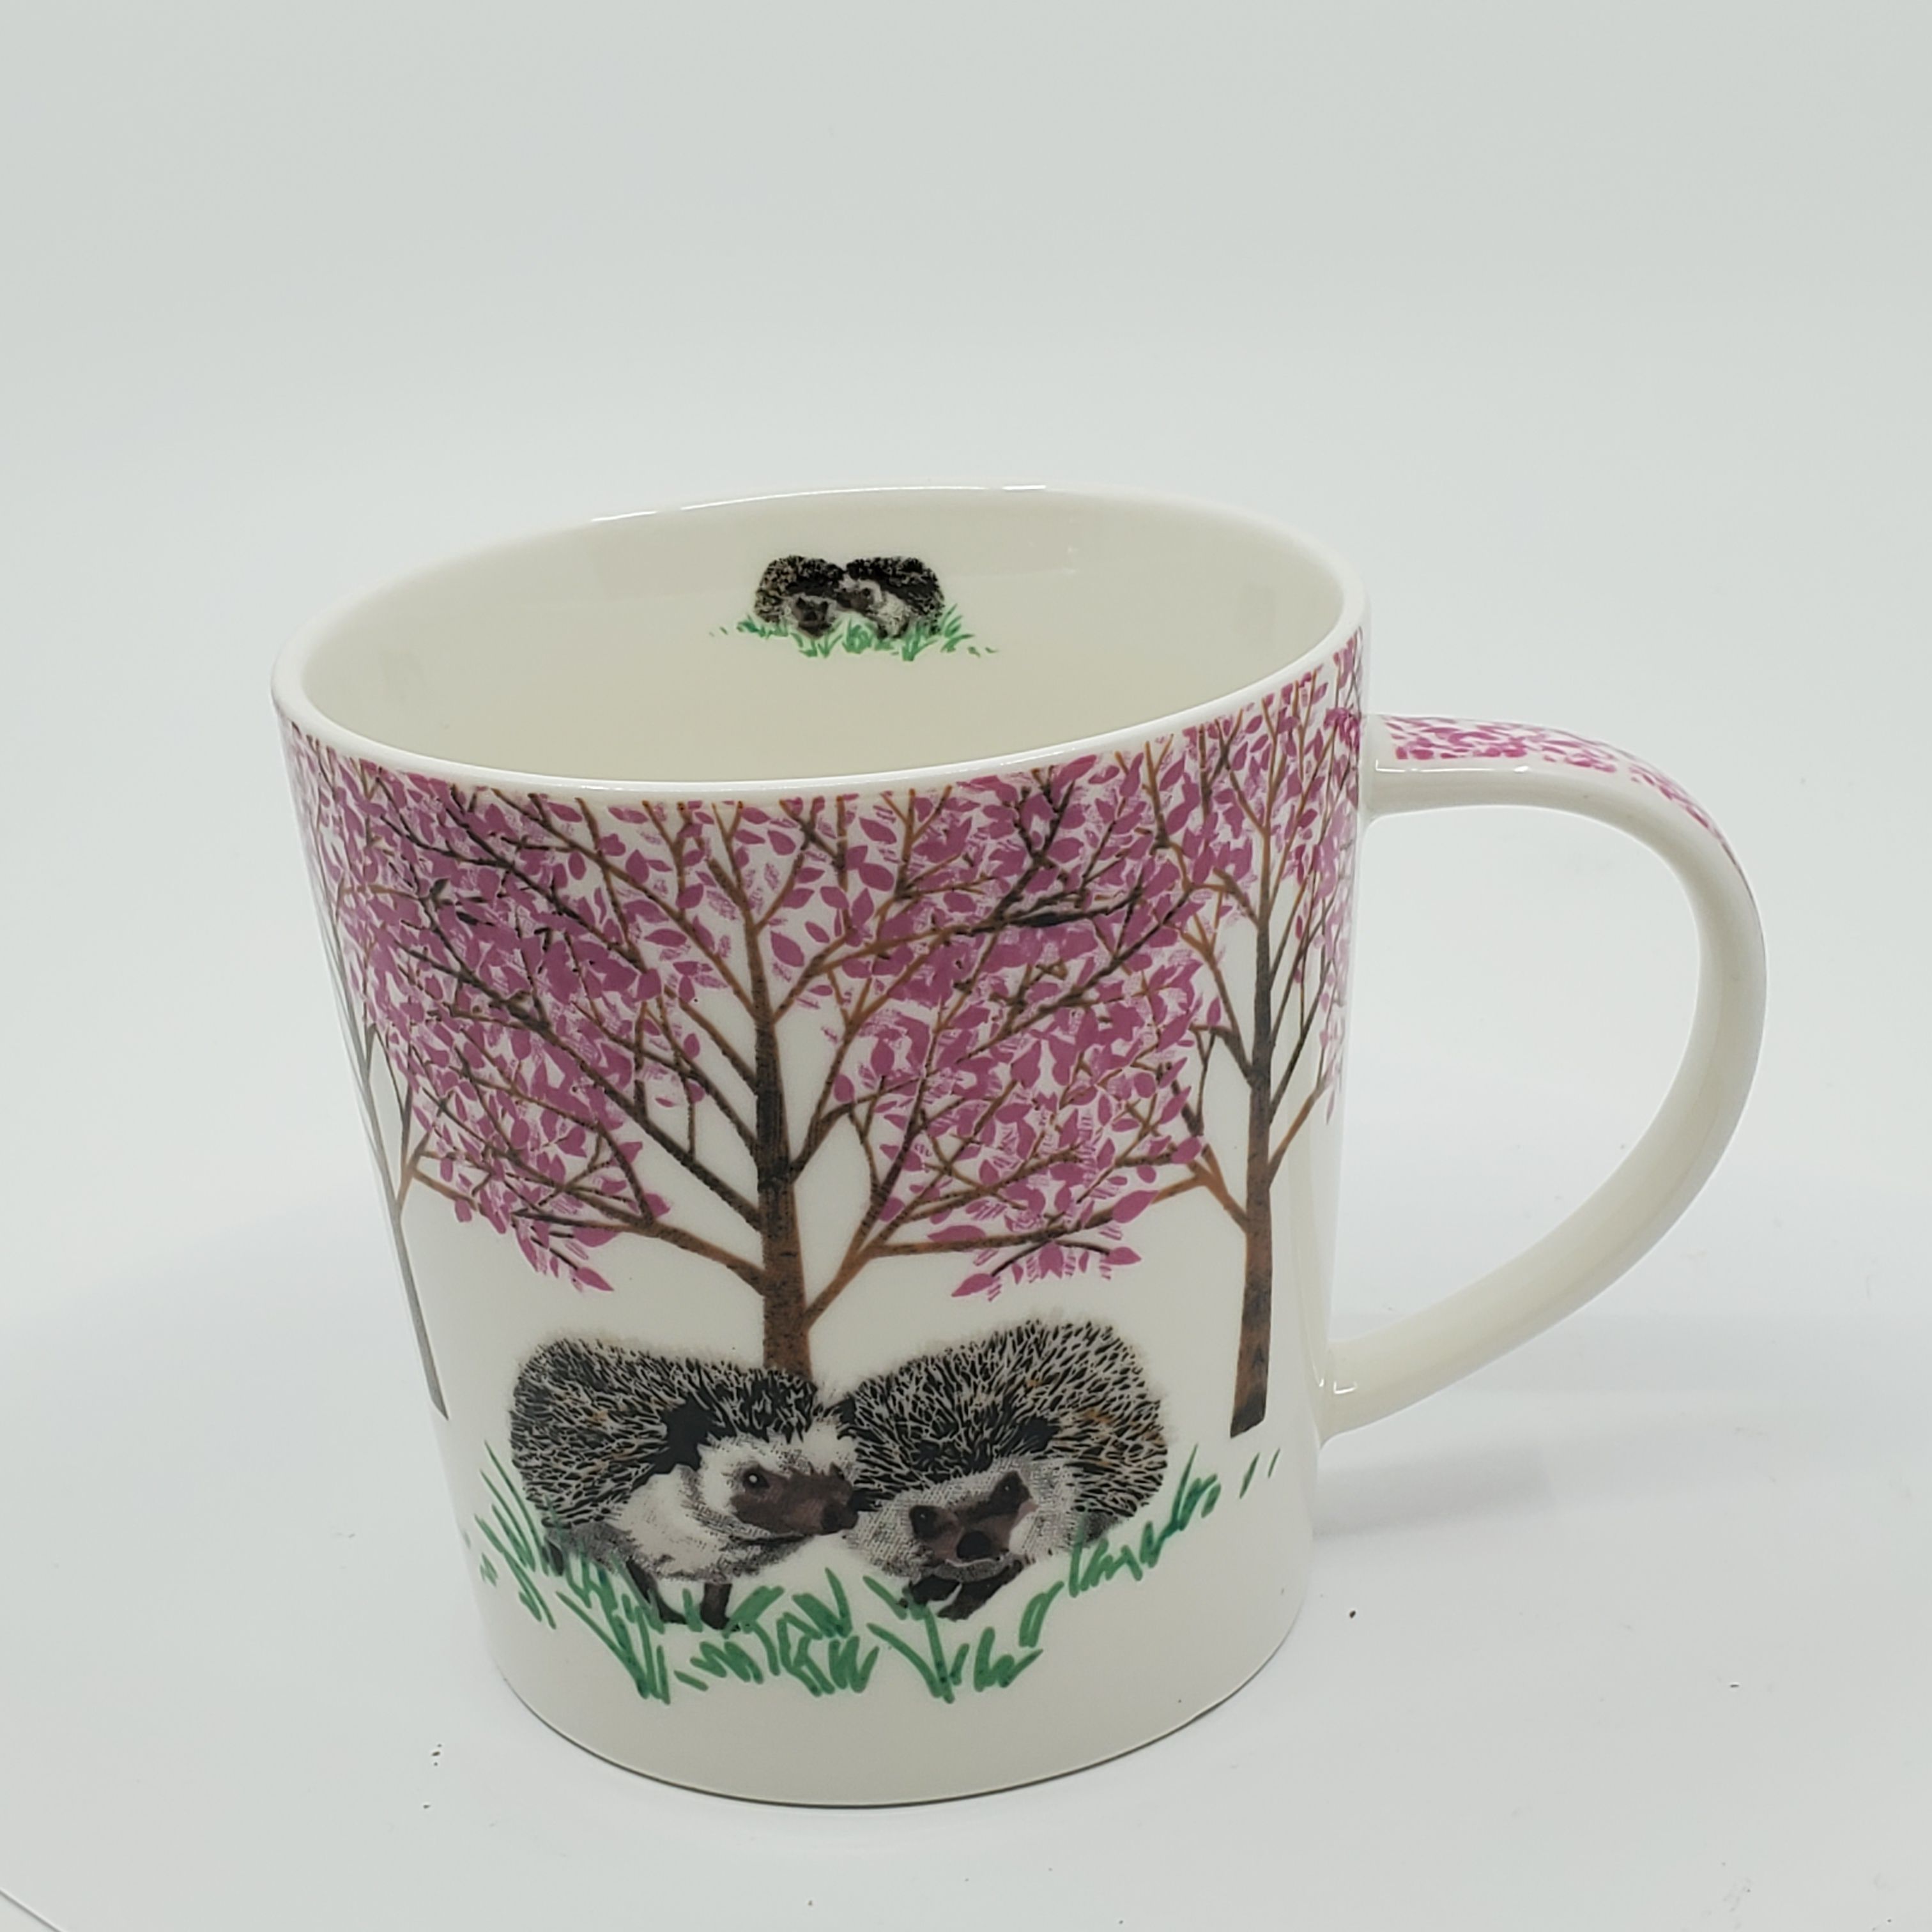 Two Can Art PPD Hedgehogs Coffee Mug Tea Cup. 13.5fl oz. Perfect shape, like new. Original box is missing.